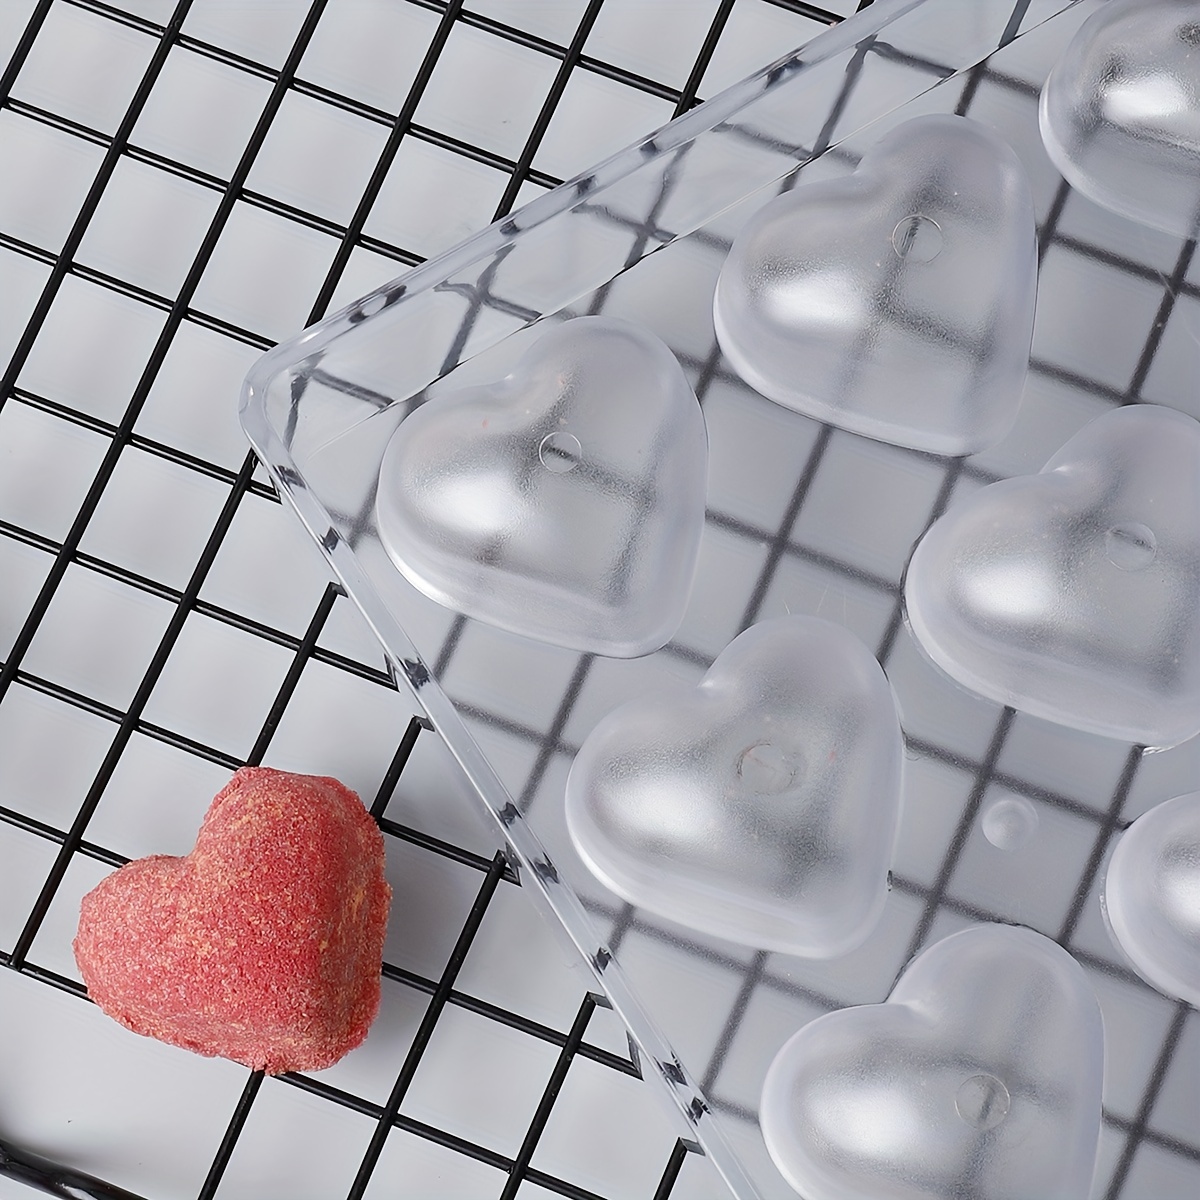  LIFETOOLS-LT Silicone Cake Pop Mold, Love Heart Petals